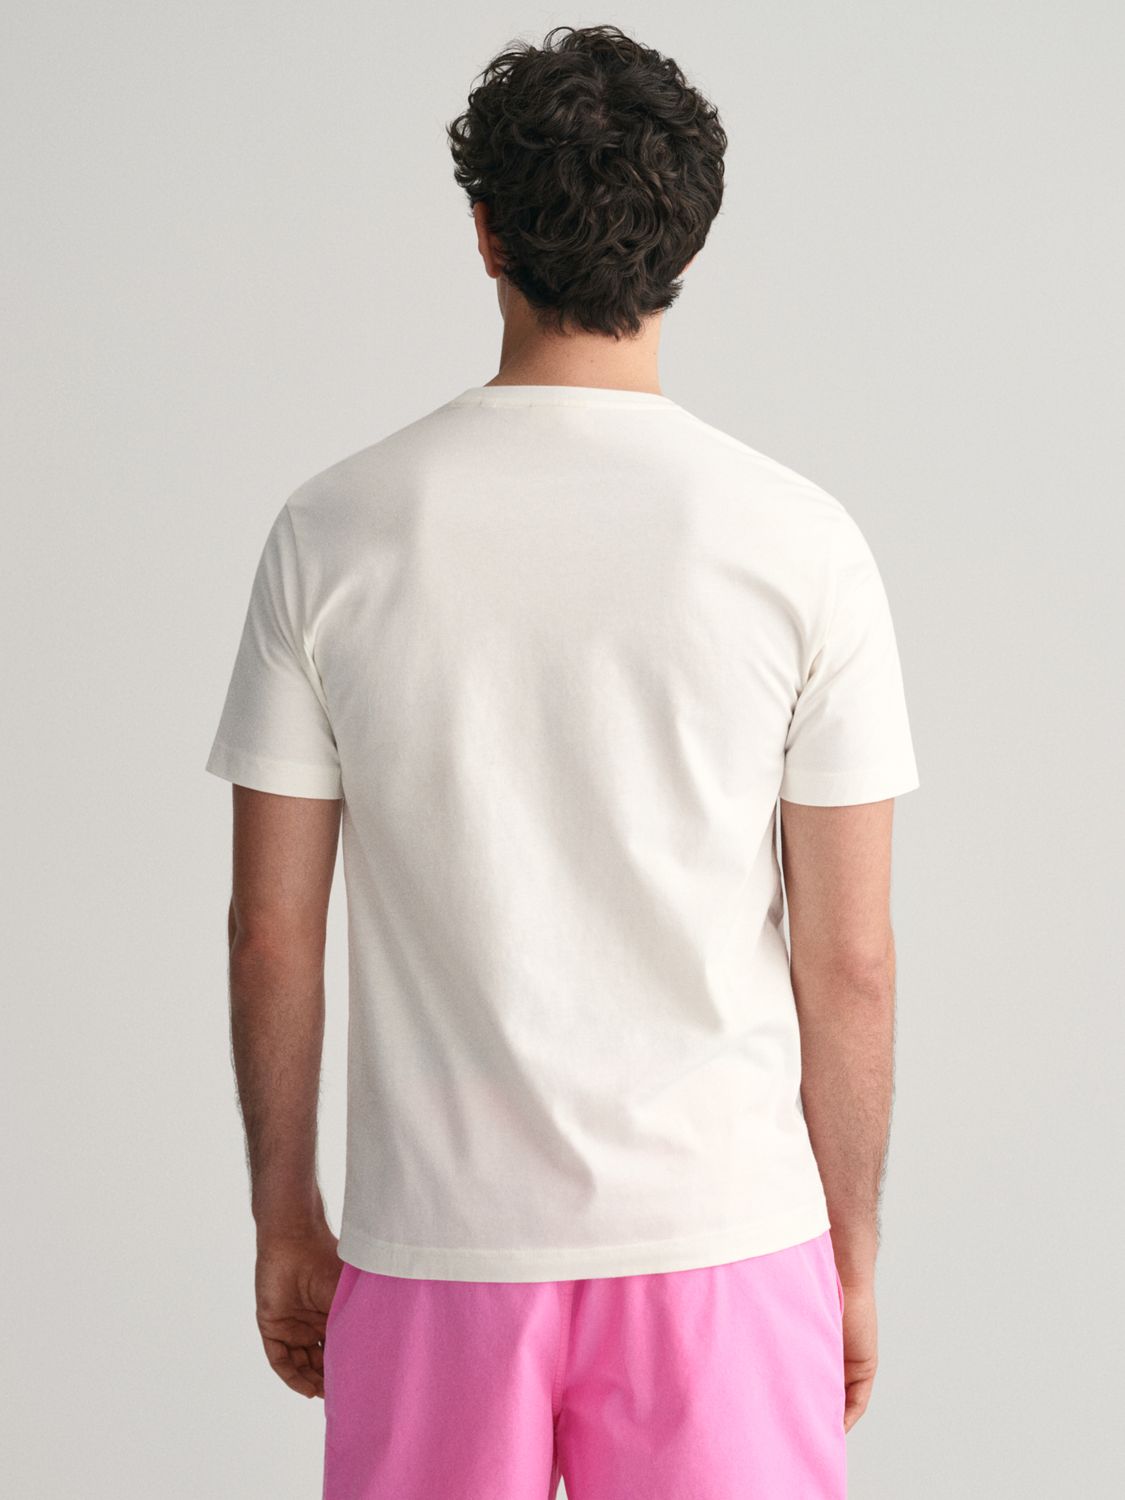 GANT Seasonal Print T-Shirt, White/Multi, S